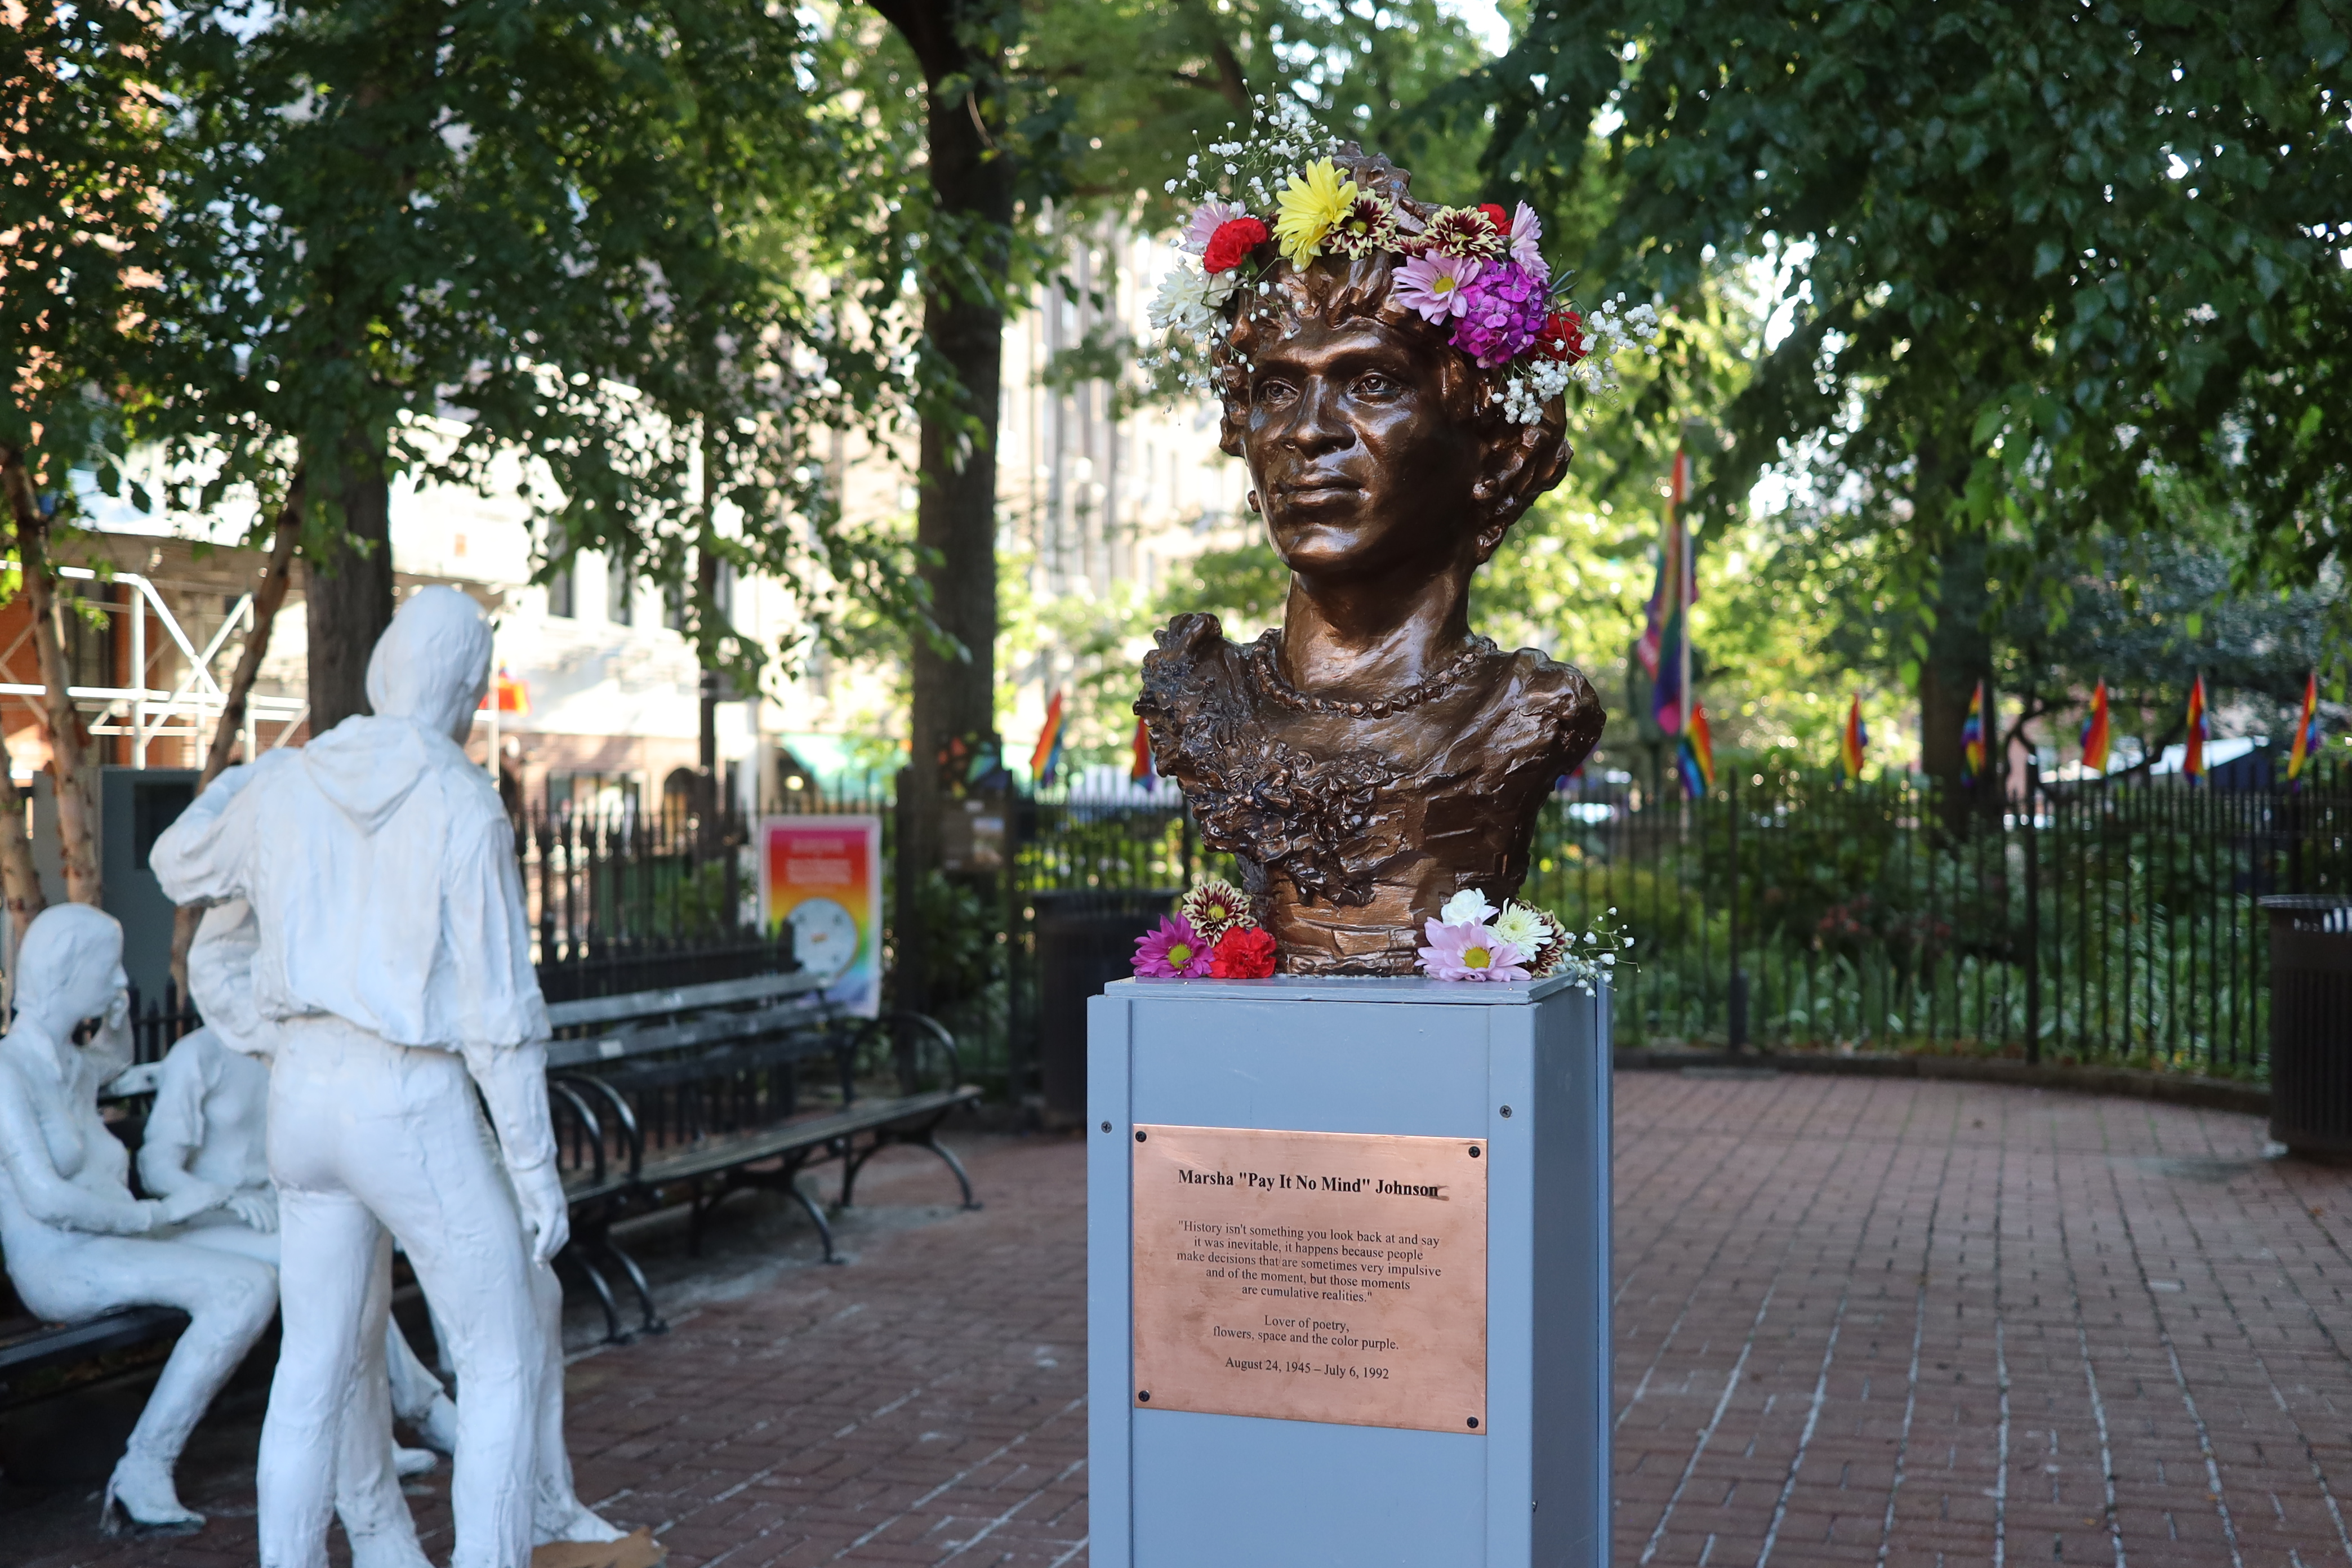 To show statue of Marsha P. Johnson